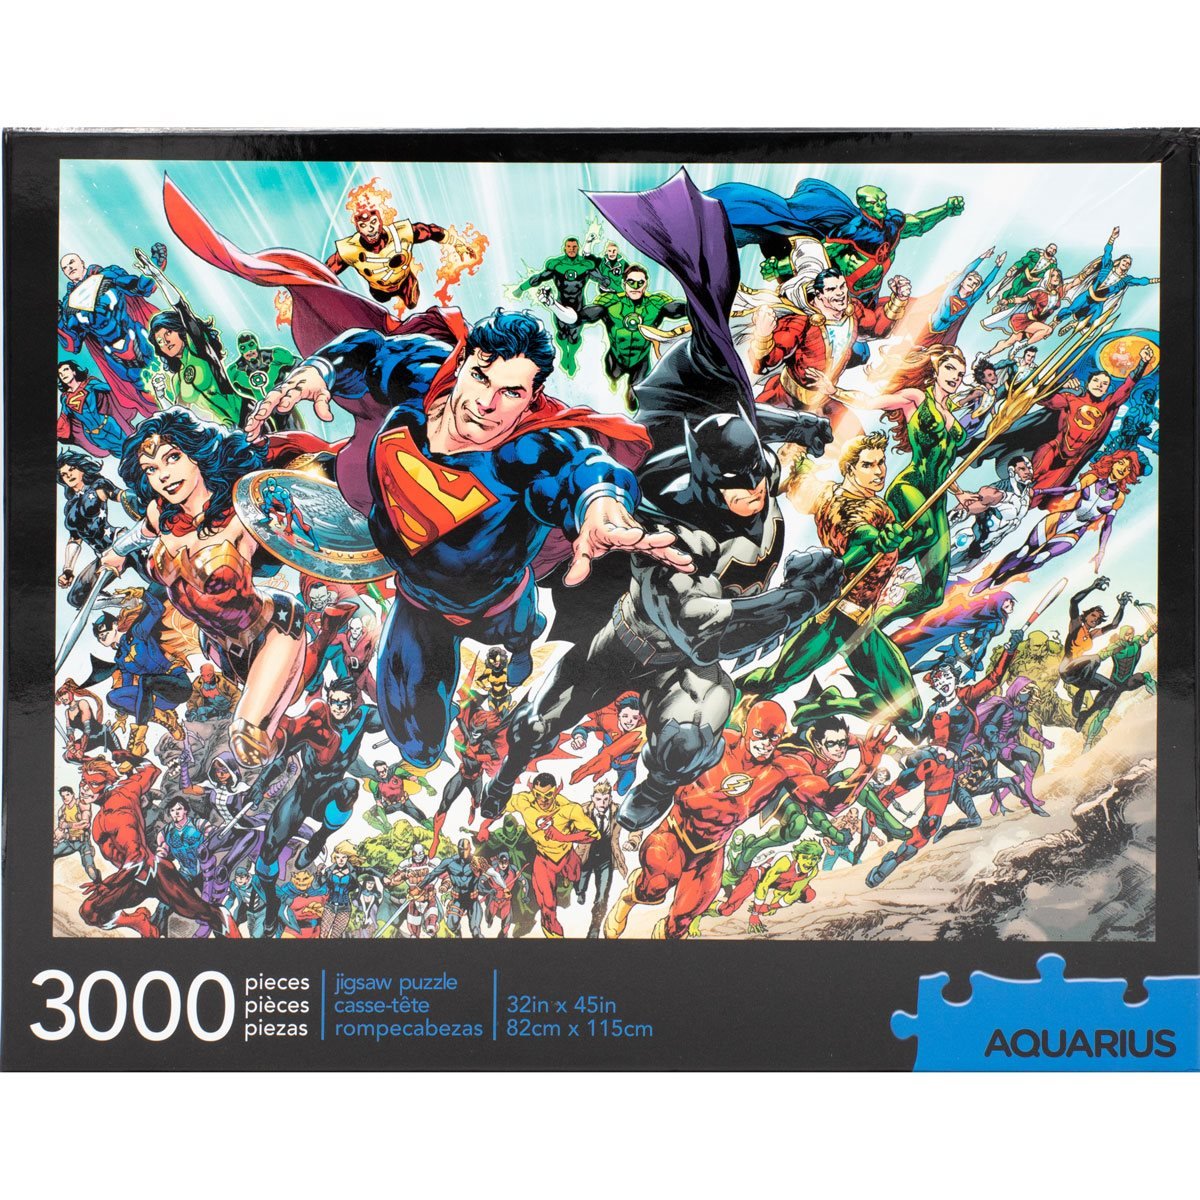 nm DC Comics Cast 3000 piece jigsaw puzzle 820mm x 1150mm 